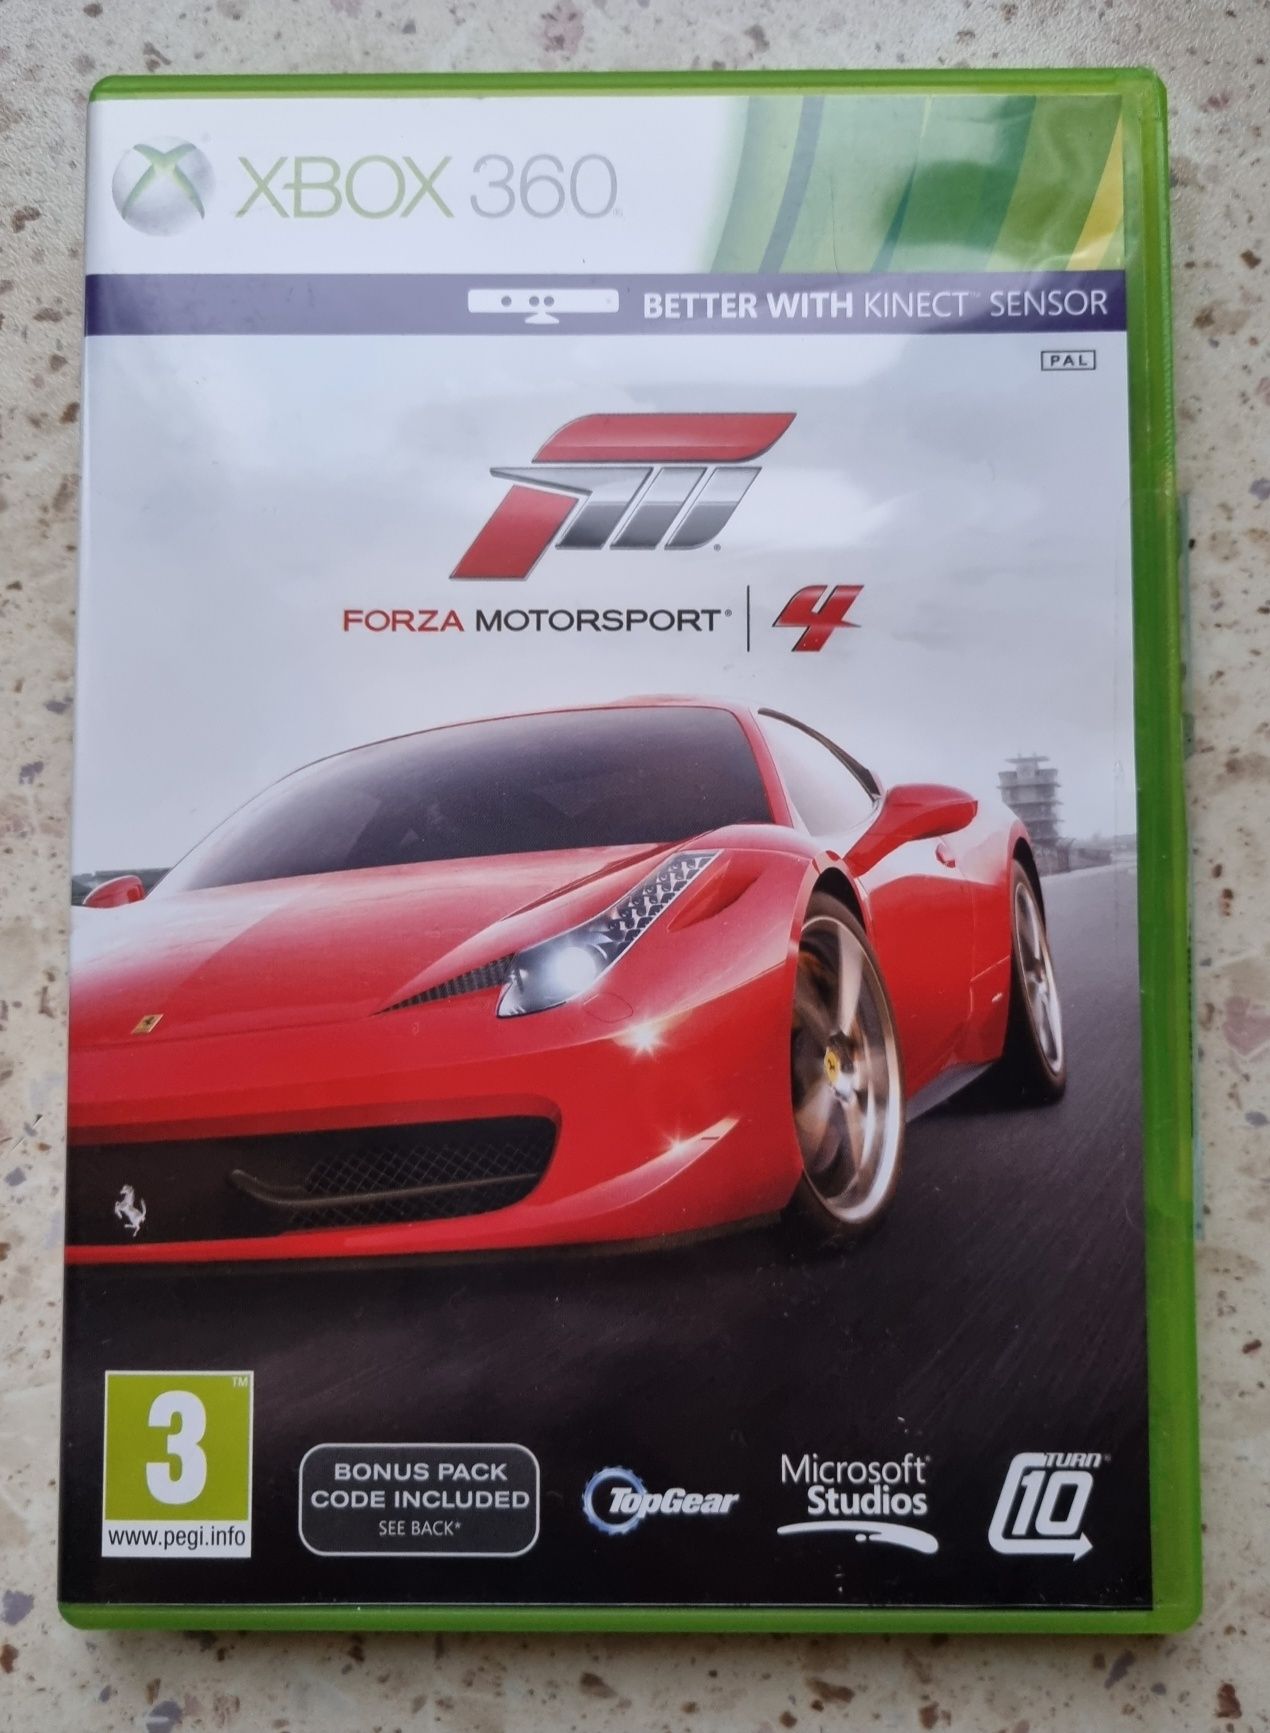 Gra Forza MotorSport 4 na Xbox 360 Kinect Sensor